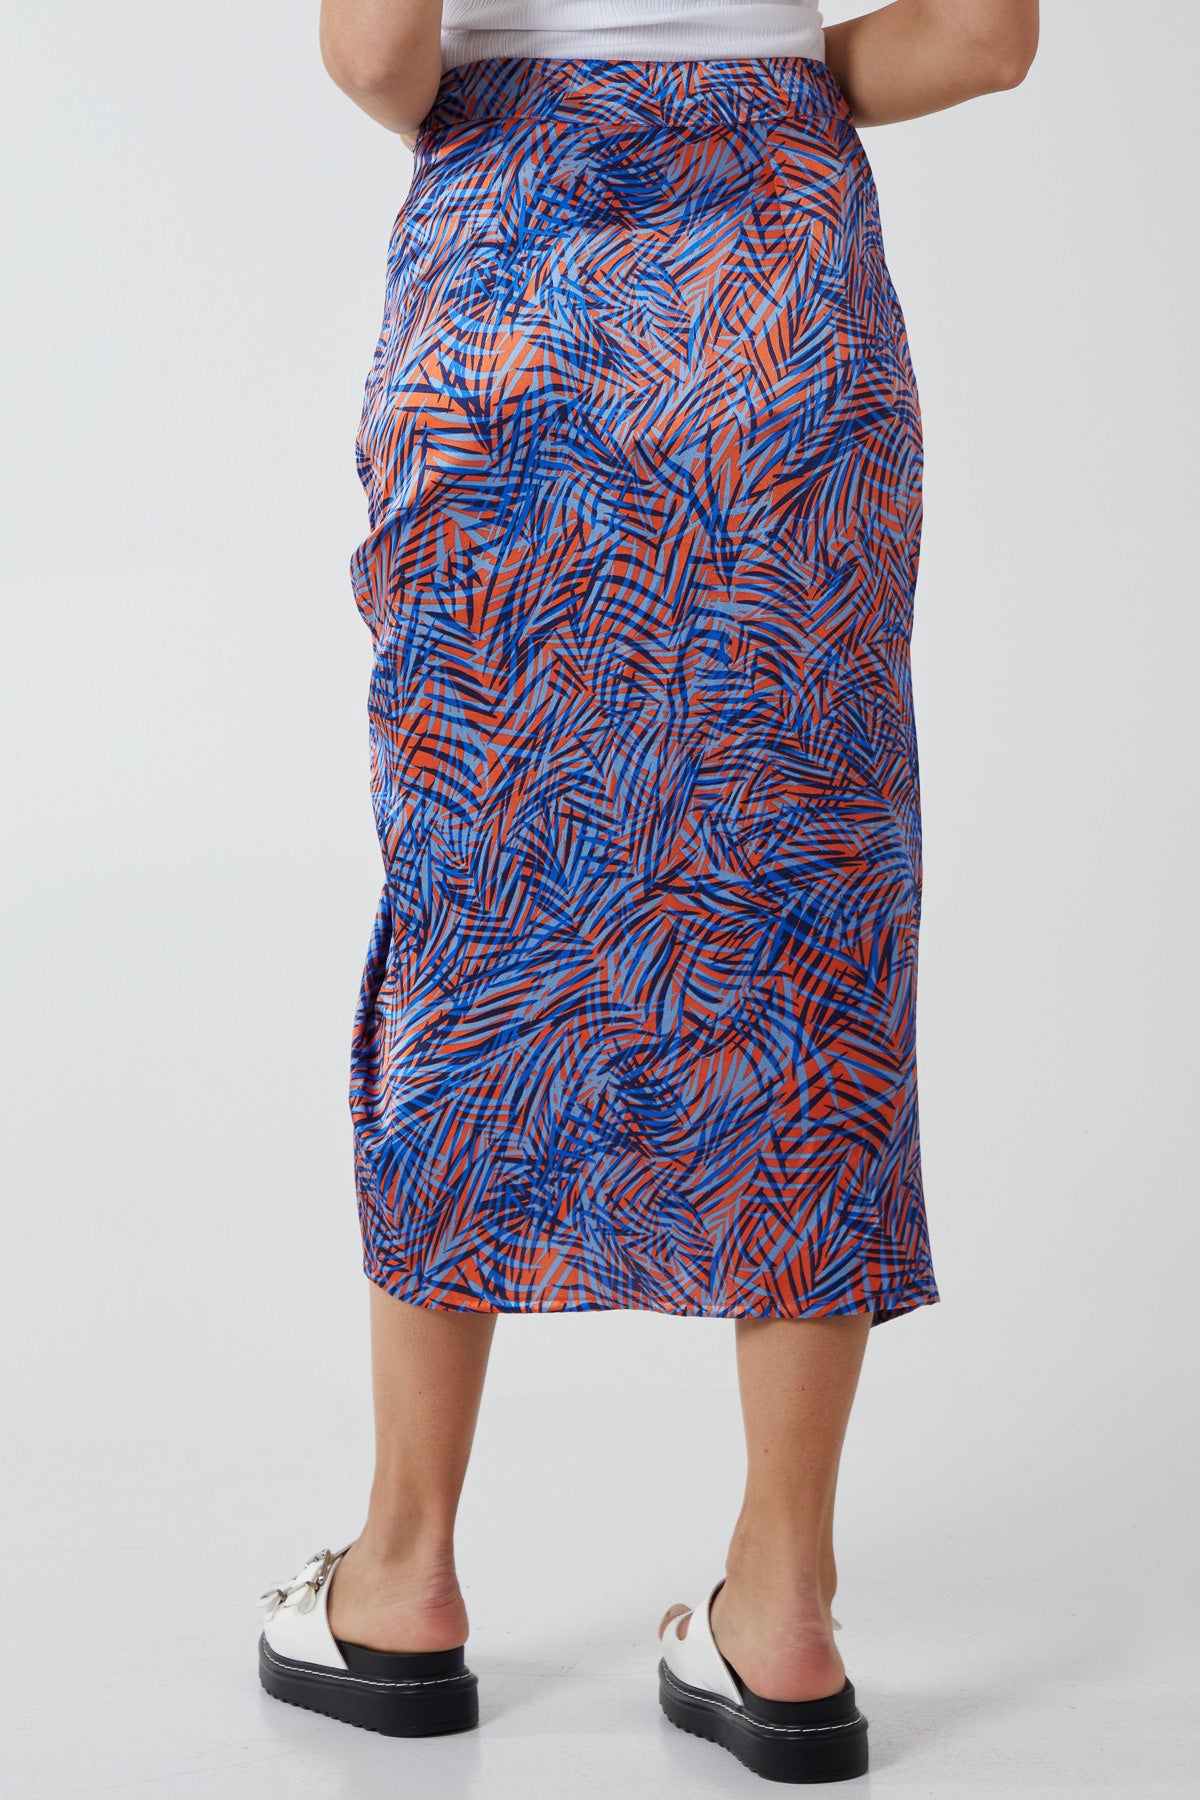 Satin Ruched Printed Midi Skirt